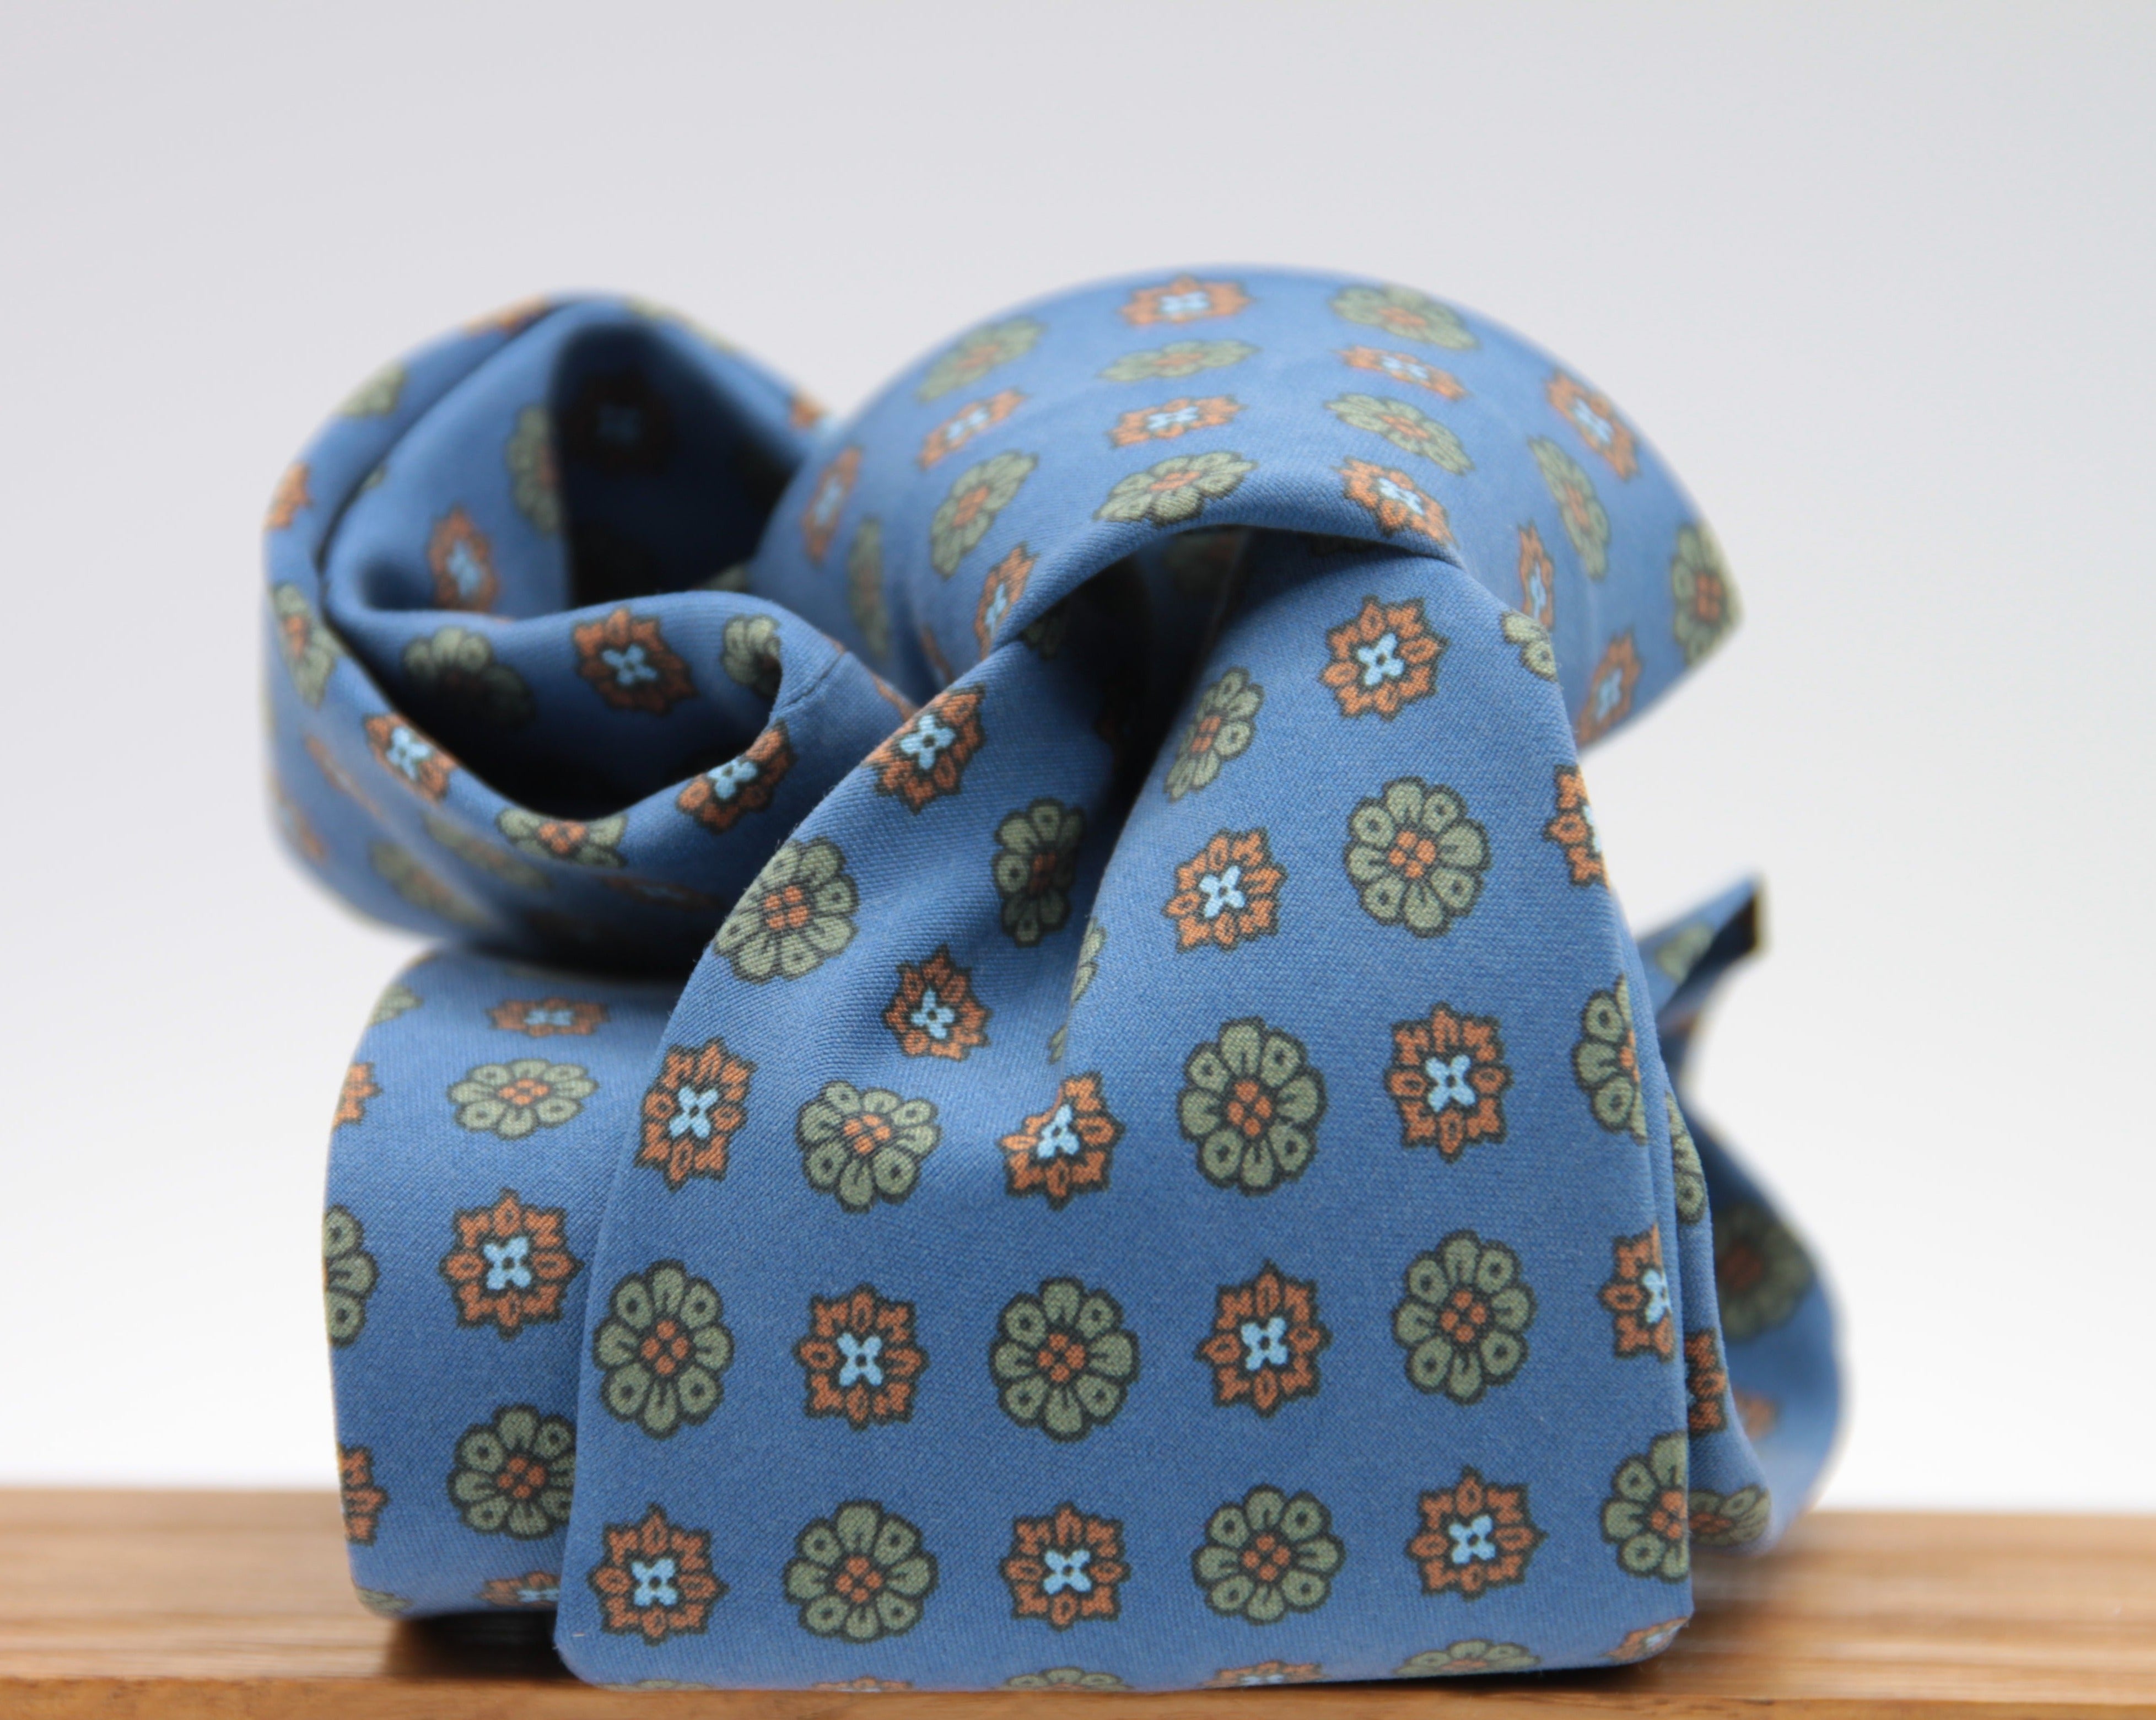 Cruciani & Bella 100% Printed Madder Silk  Italian fabric Unlined tie Denim Blue, Brown and Green Handmade in Italy 8 cm x 150 cm #6613